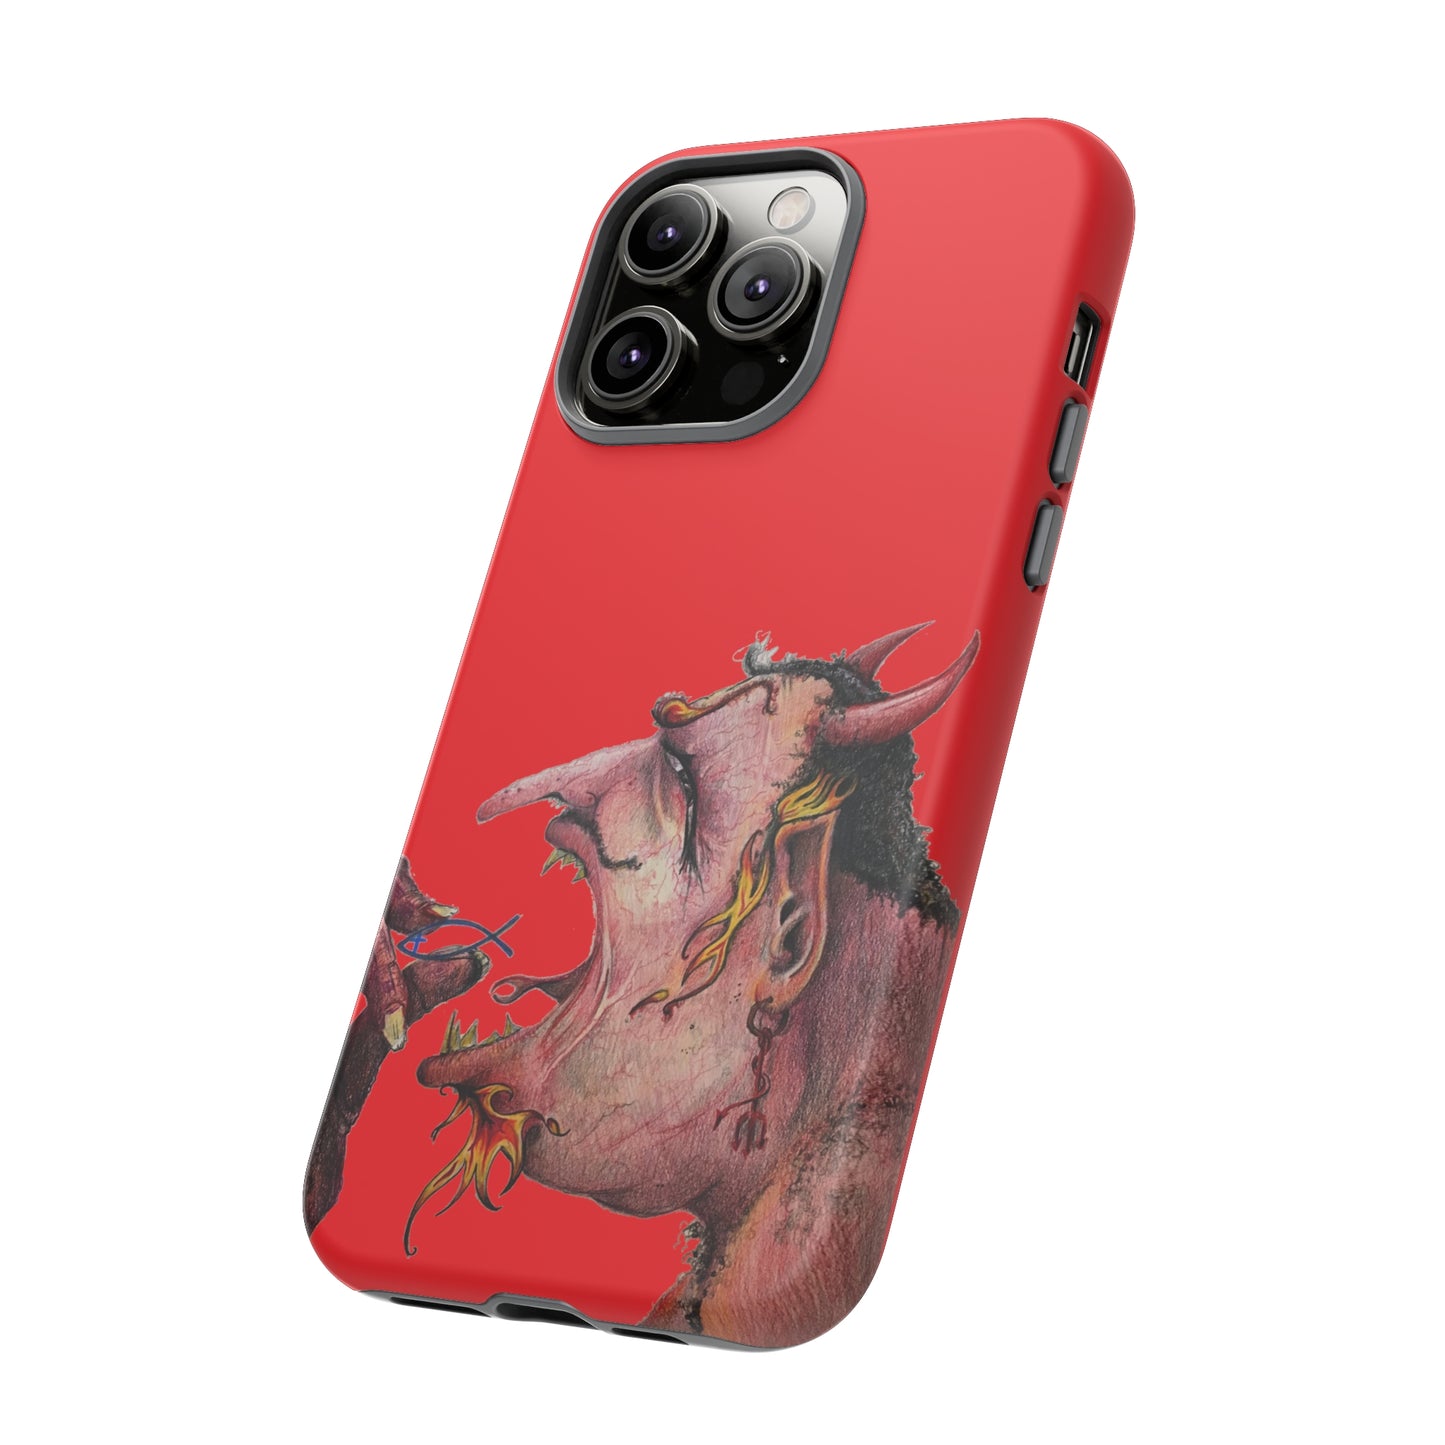 Devilishly Hungry - IPhone 11 Case